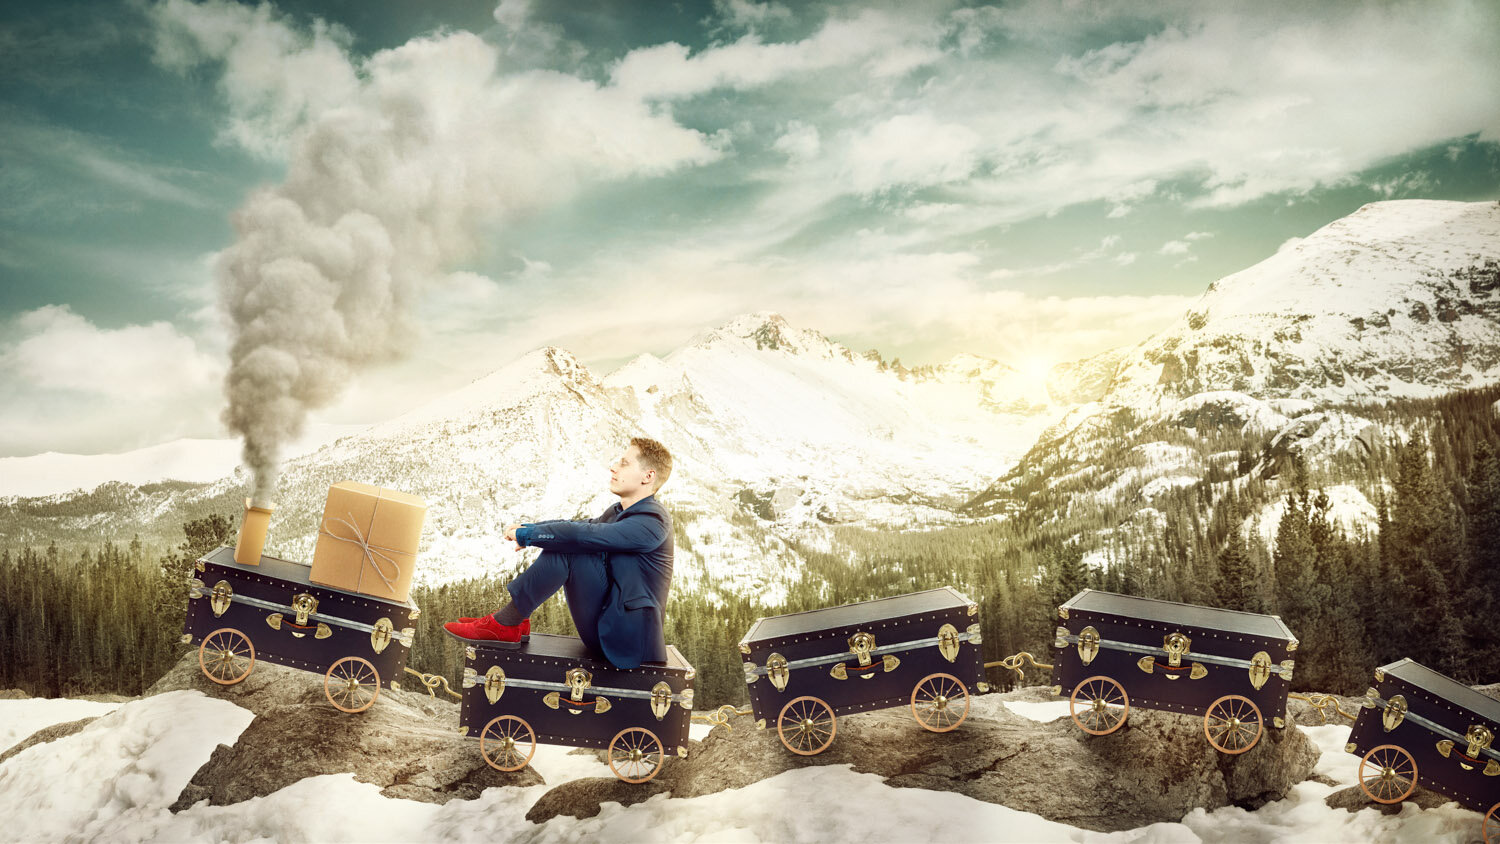 conceptual portrait of magician Ben Seidman riding a train made of vintage trunks through the Rocky Mountains by portrait photographer Hanna Agar